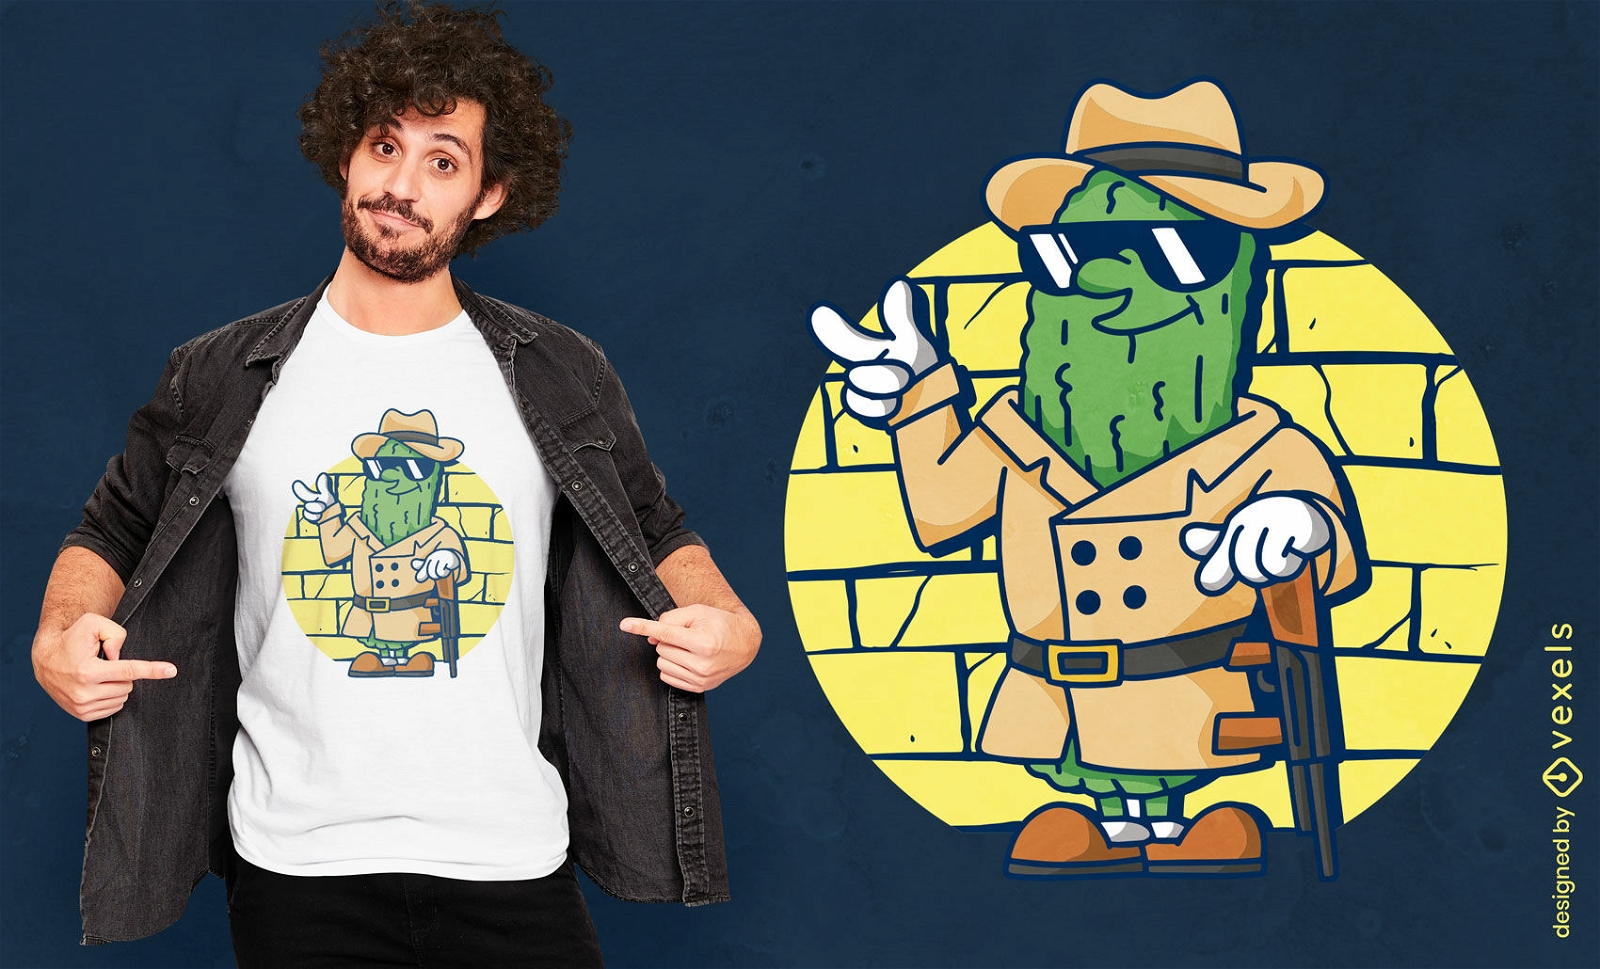 Pickle food secret agent t-shirt design